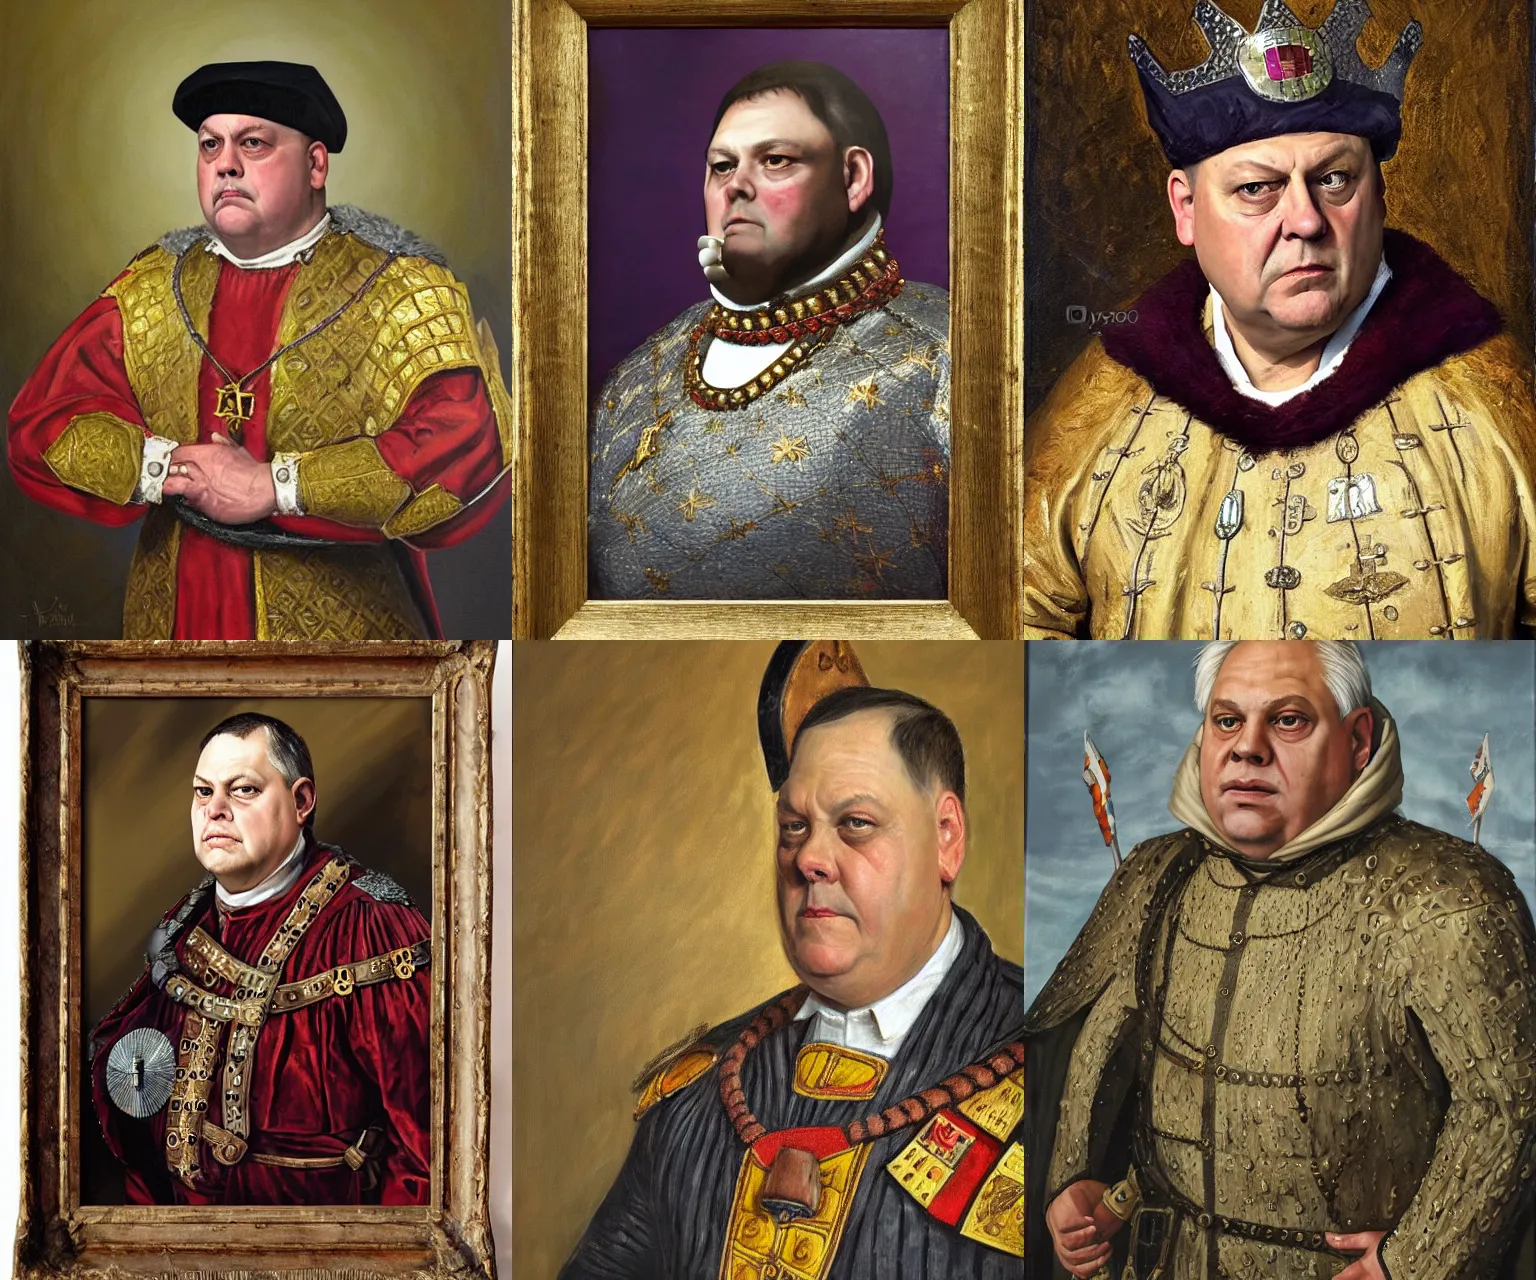 Prompt: David Coburn politician as a medieval commander, portrait, realistic oil painting by Boris Valejo